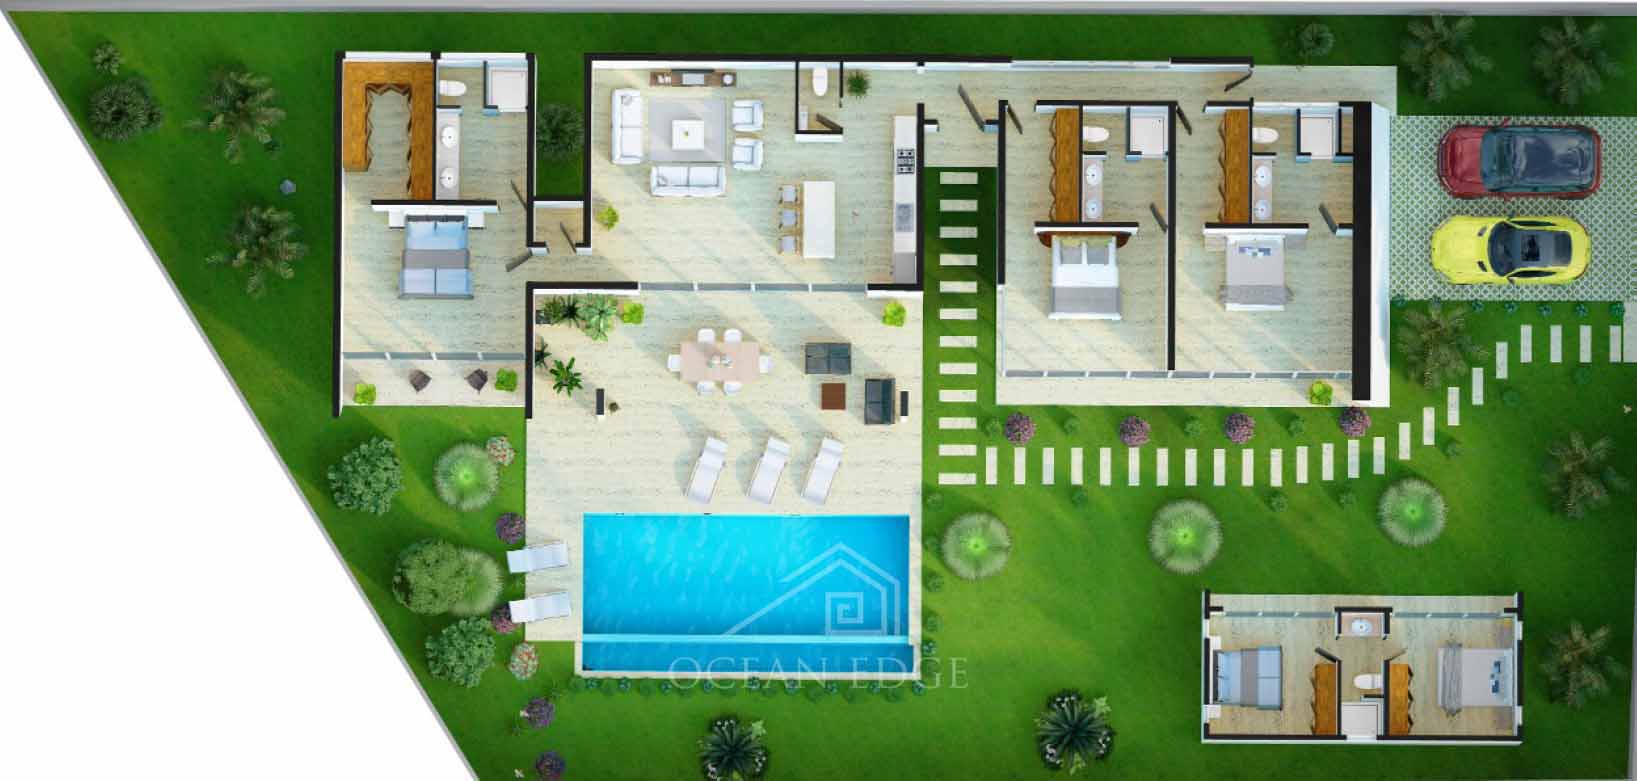 Luxury 4-bed villa near tourism beach - Las-terrenas-real-estate-dominican-republic-plan (6)